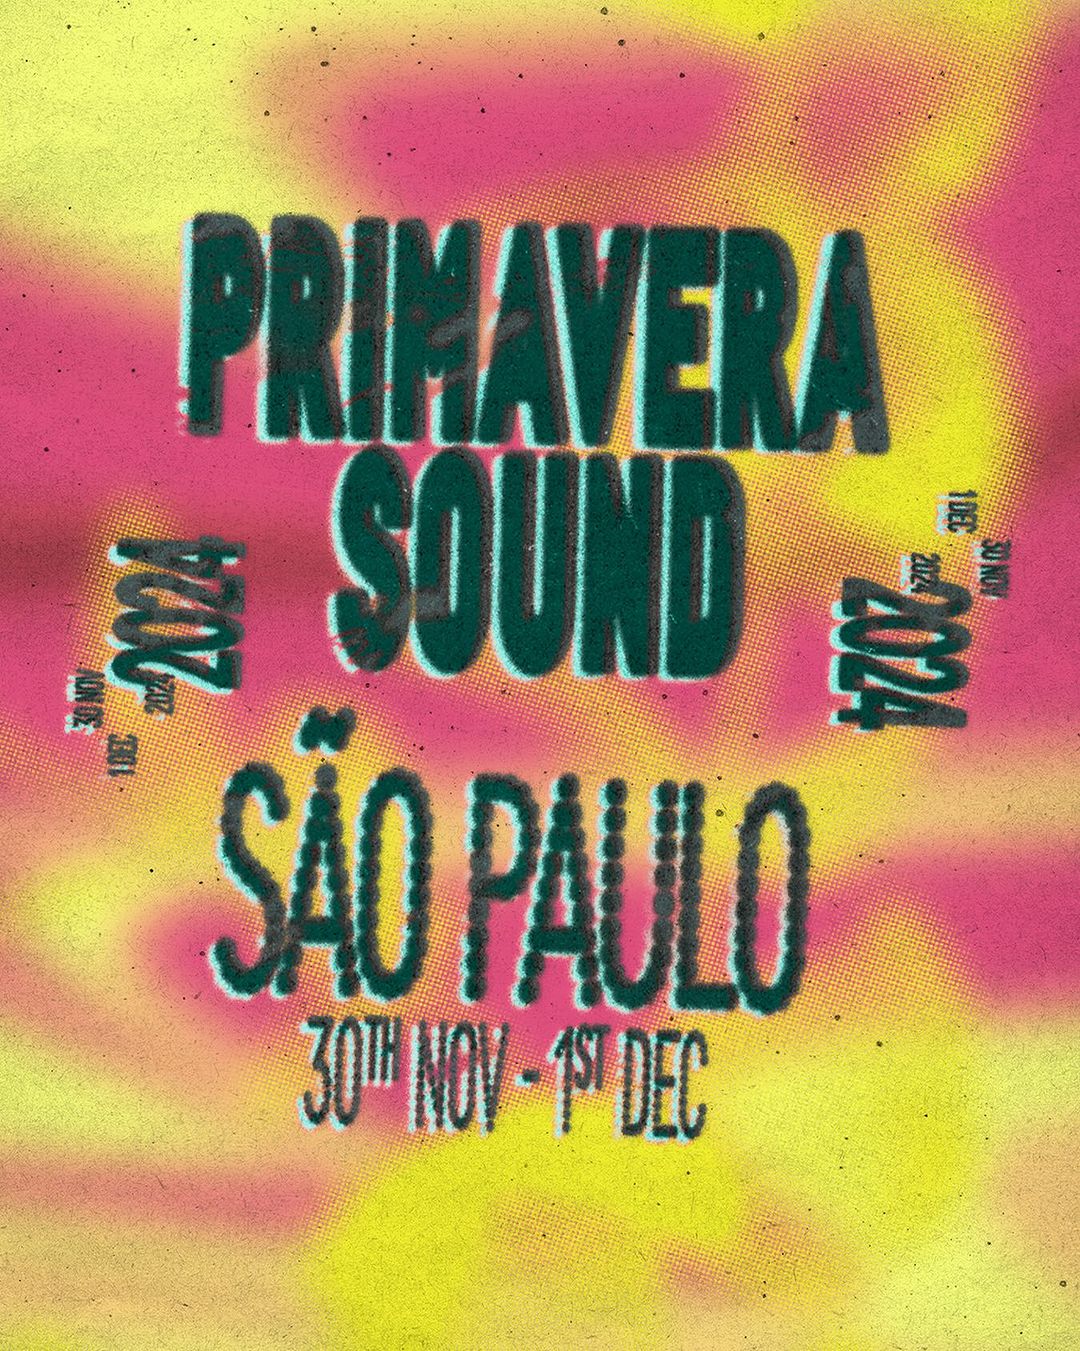 Primavera Sound São Paulo